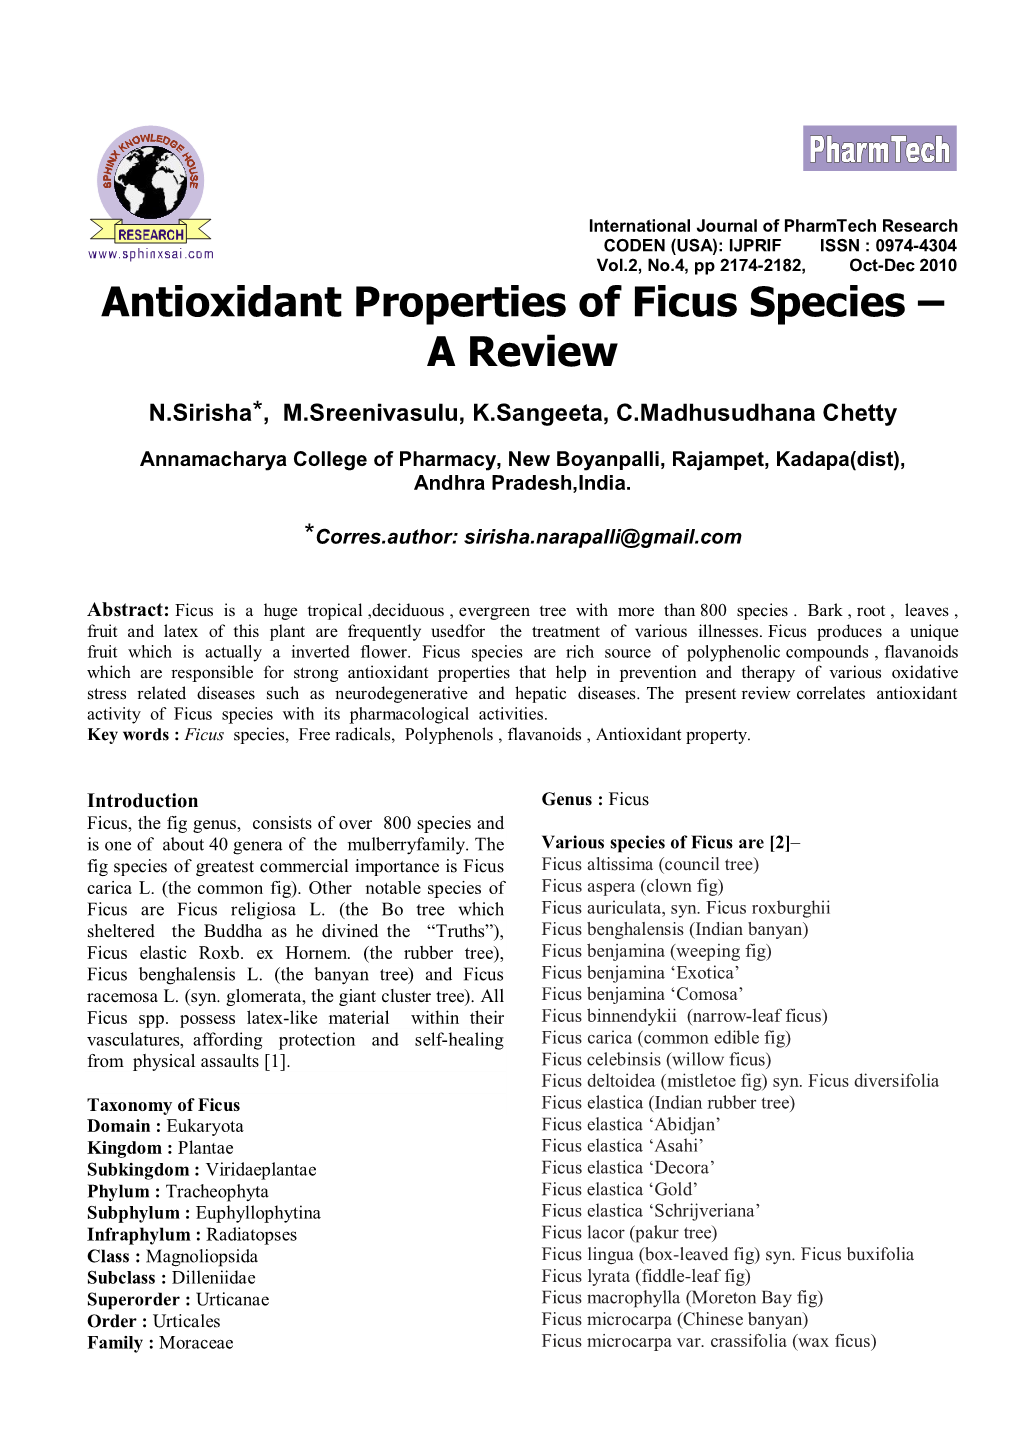 Antioxidant Properties of Ficus Species – a Review